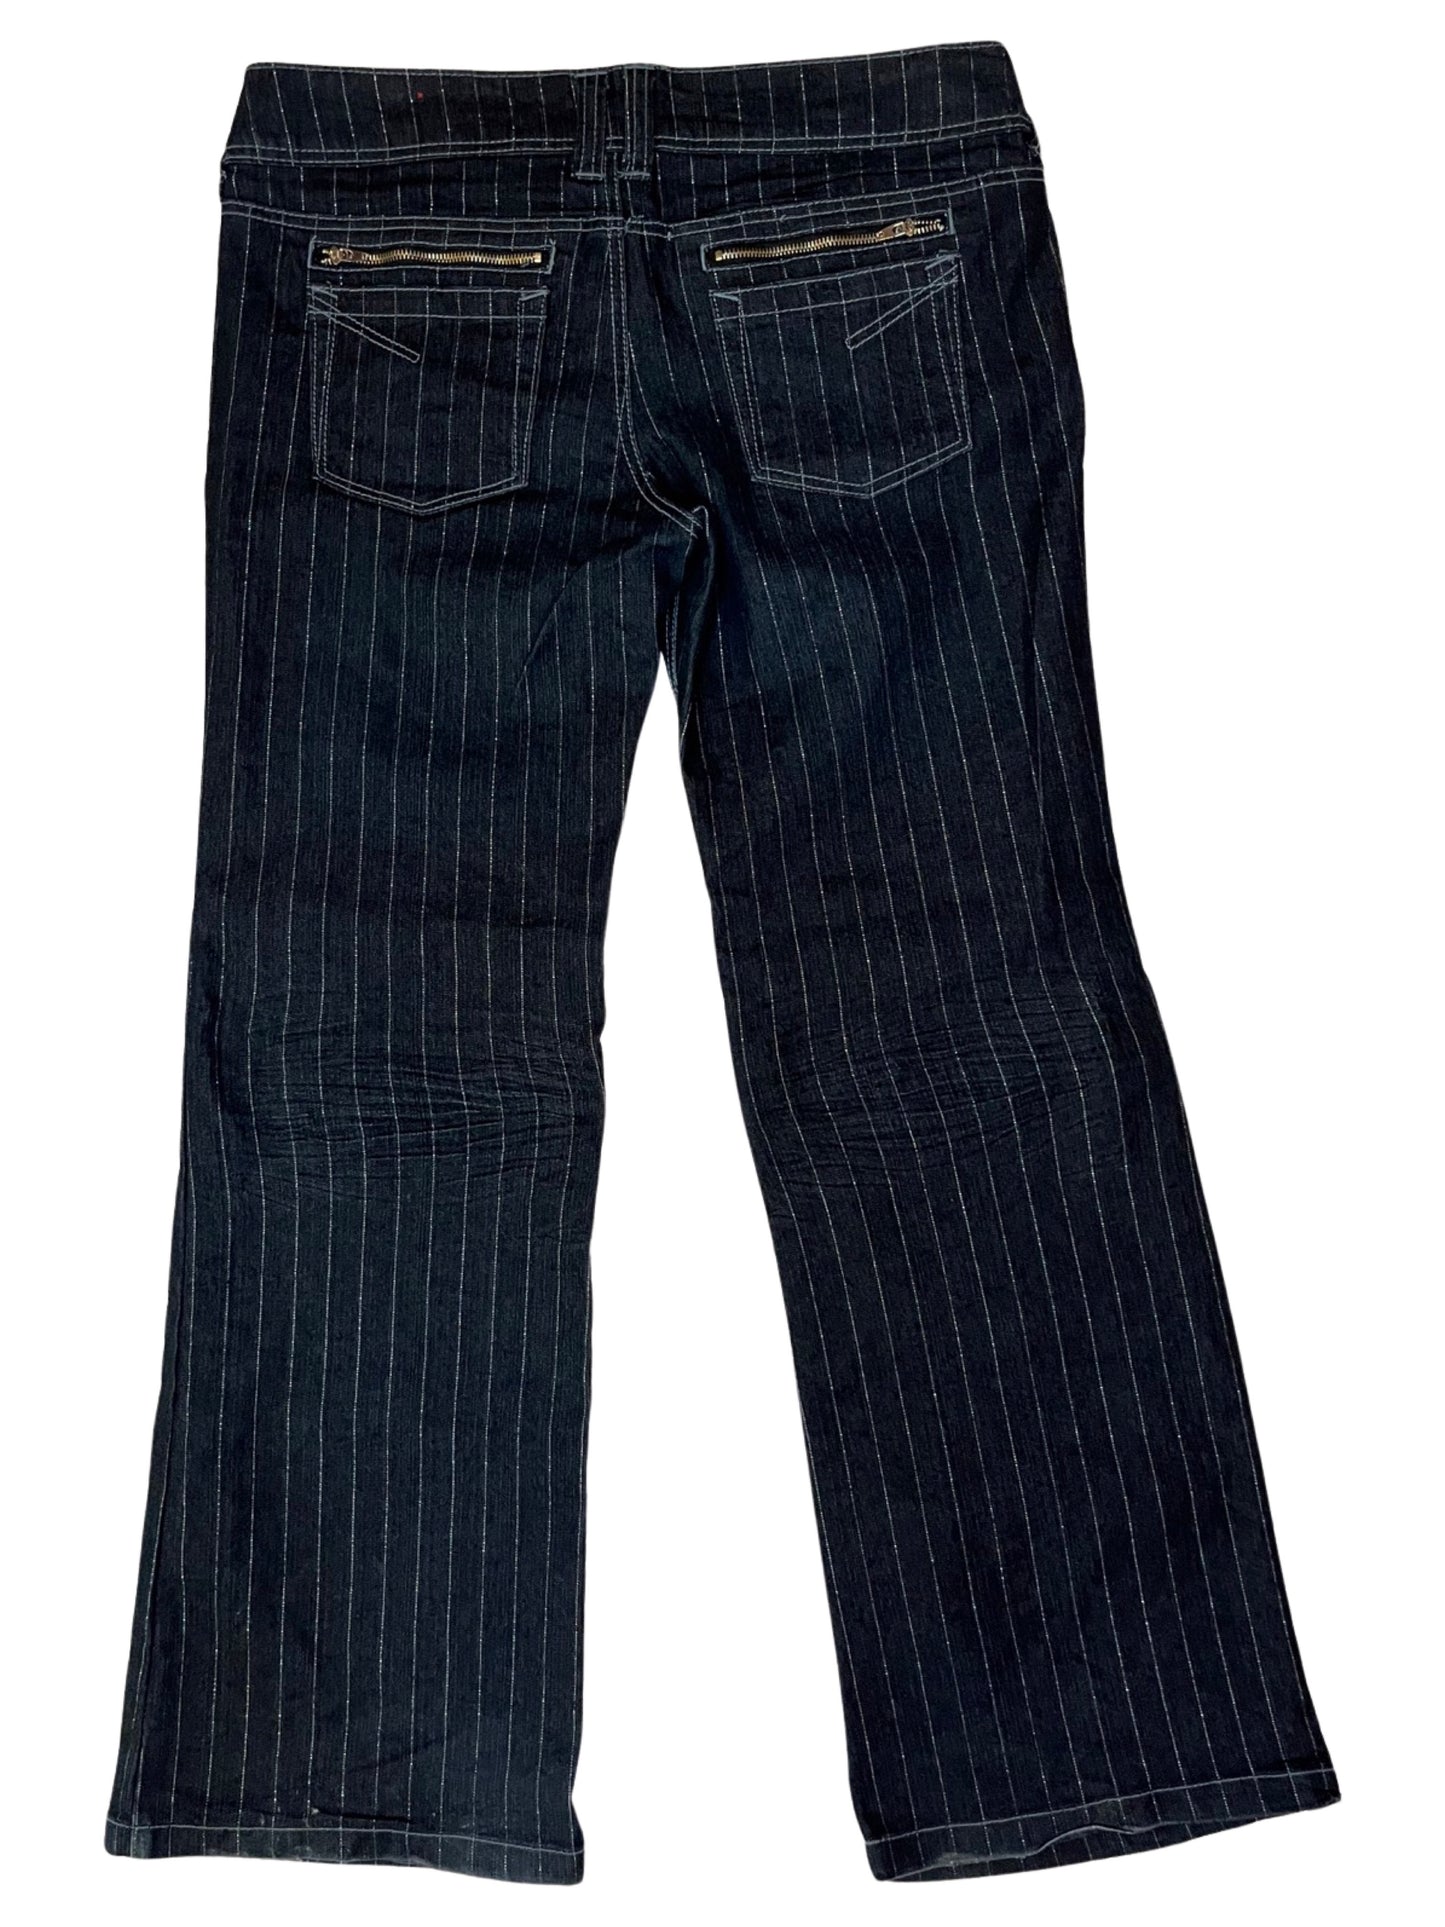 Low Rise Metallic Stripe Denim Pants